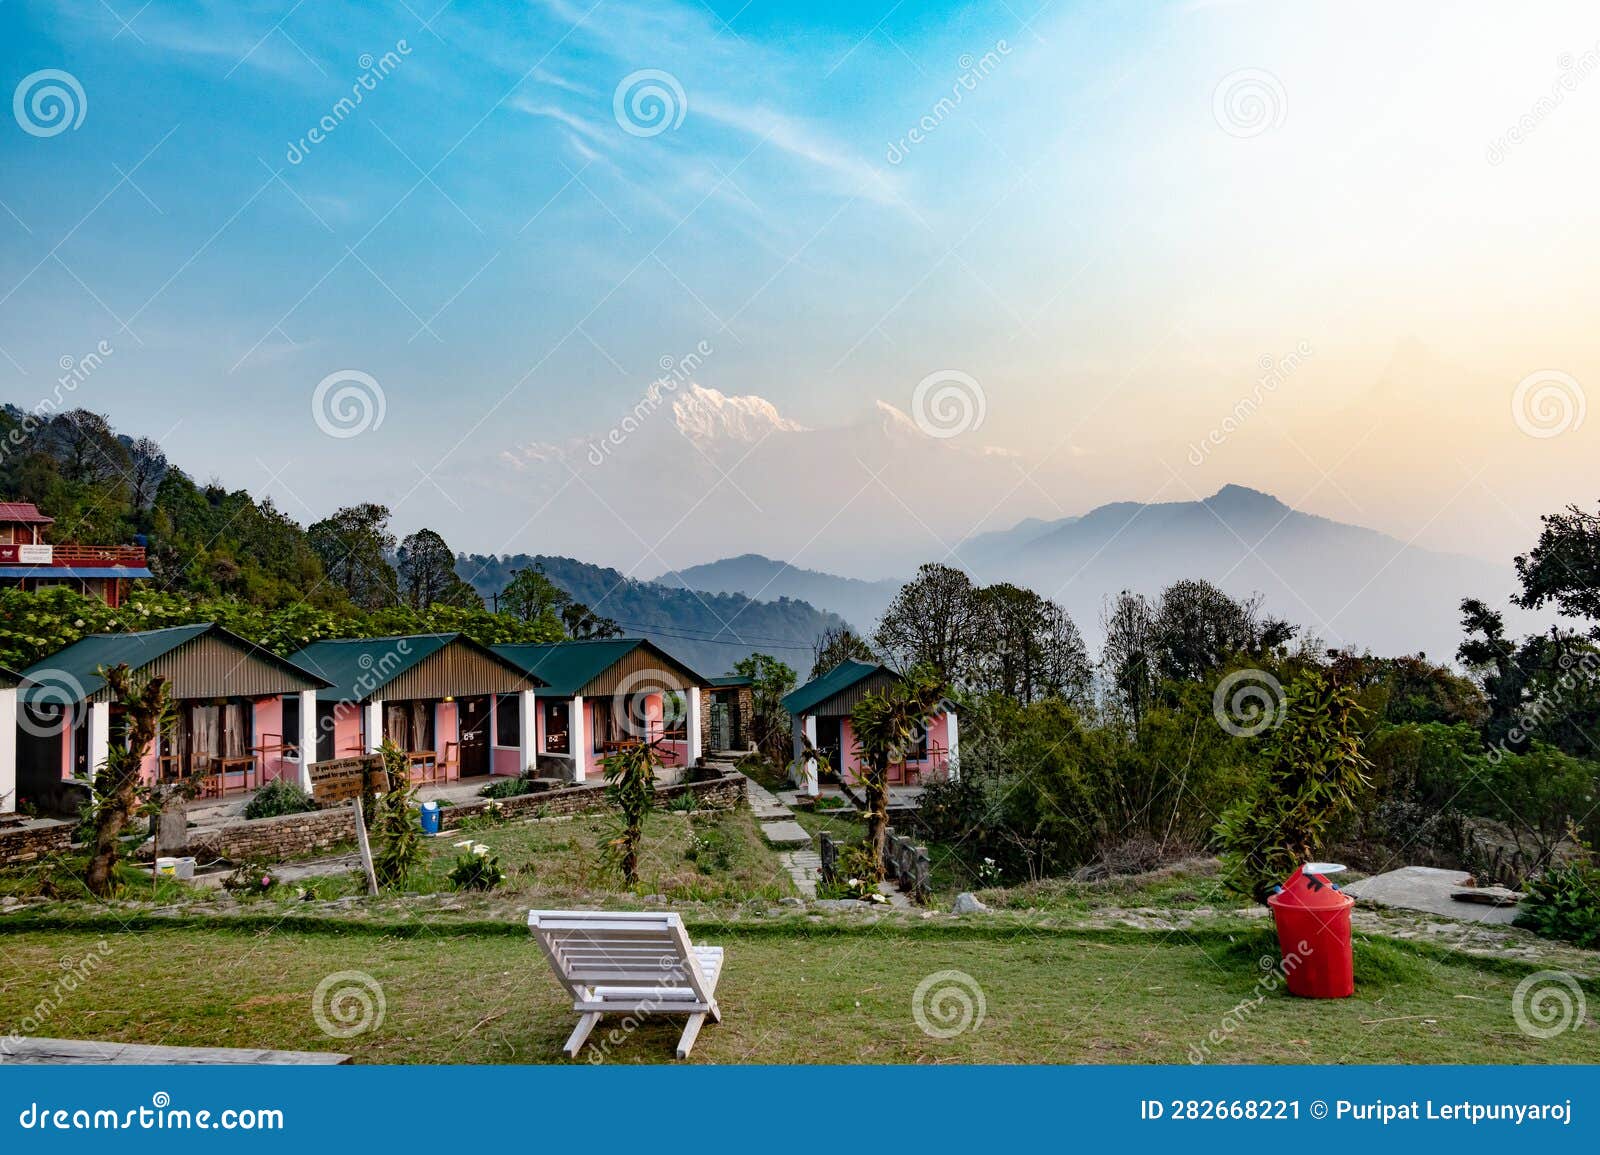 The Australian Camp, Pokhara, Nepal Stock Image - Image of countryside ...